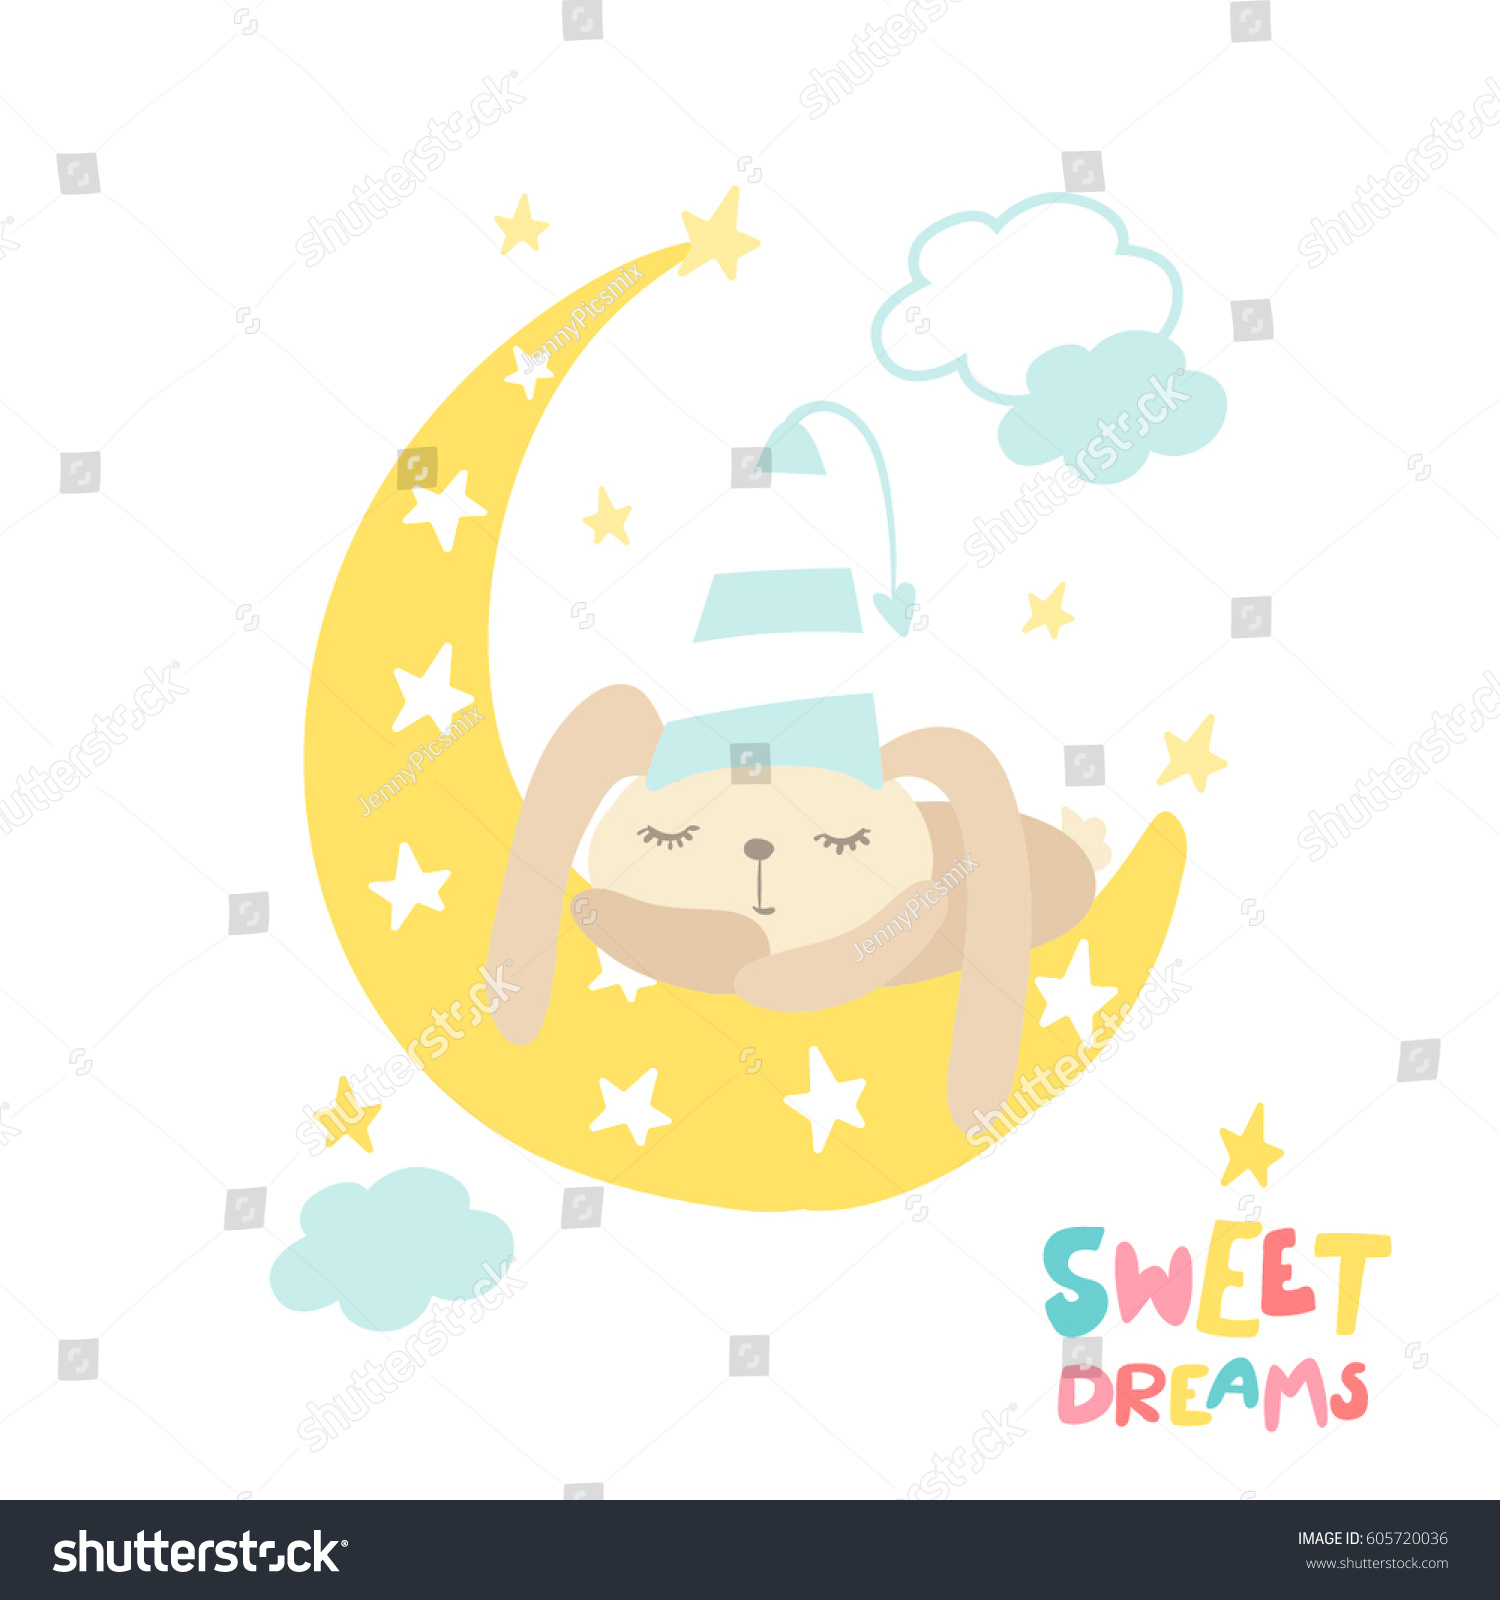 Download Cute Sleeping Bunny On Moon Inscription Stock Vector ...